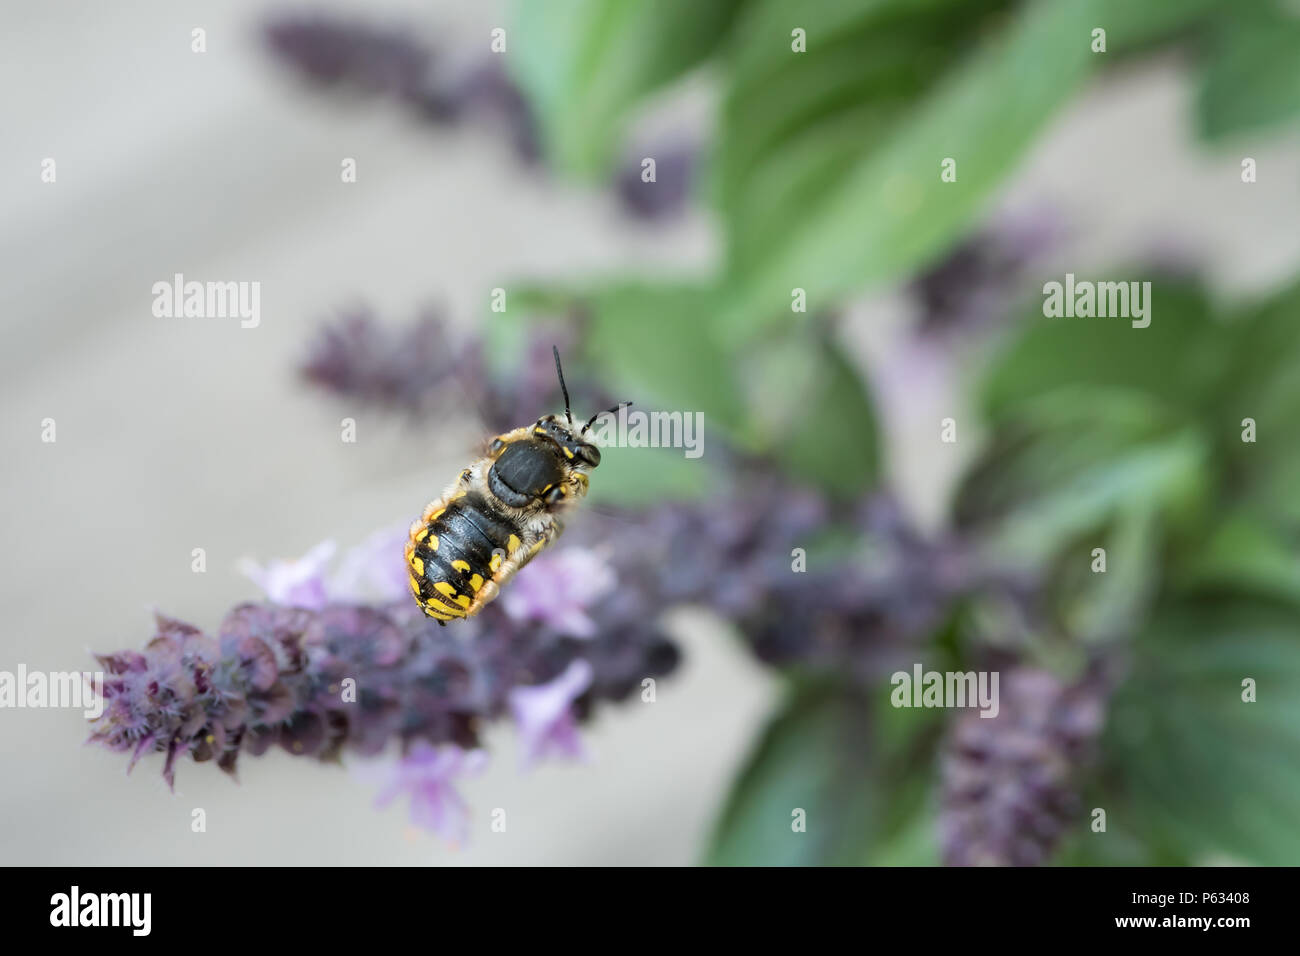 European wool carder bee (Anthidium manicatum, Megachilidae) in flight approaching a purple flower Stock Photo